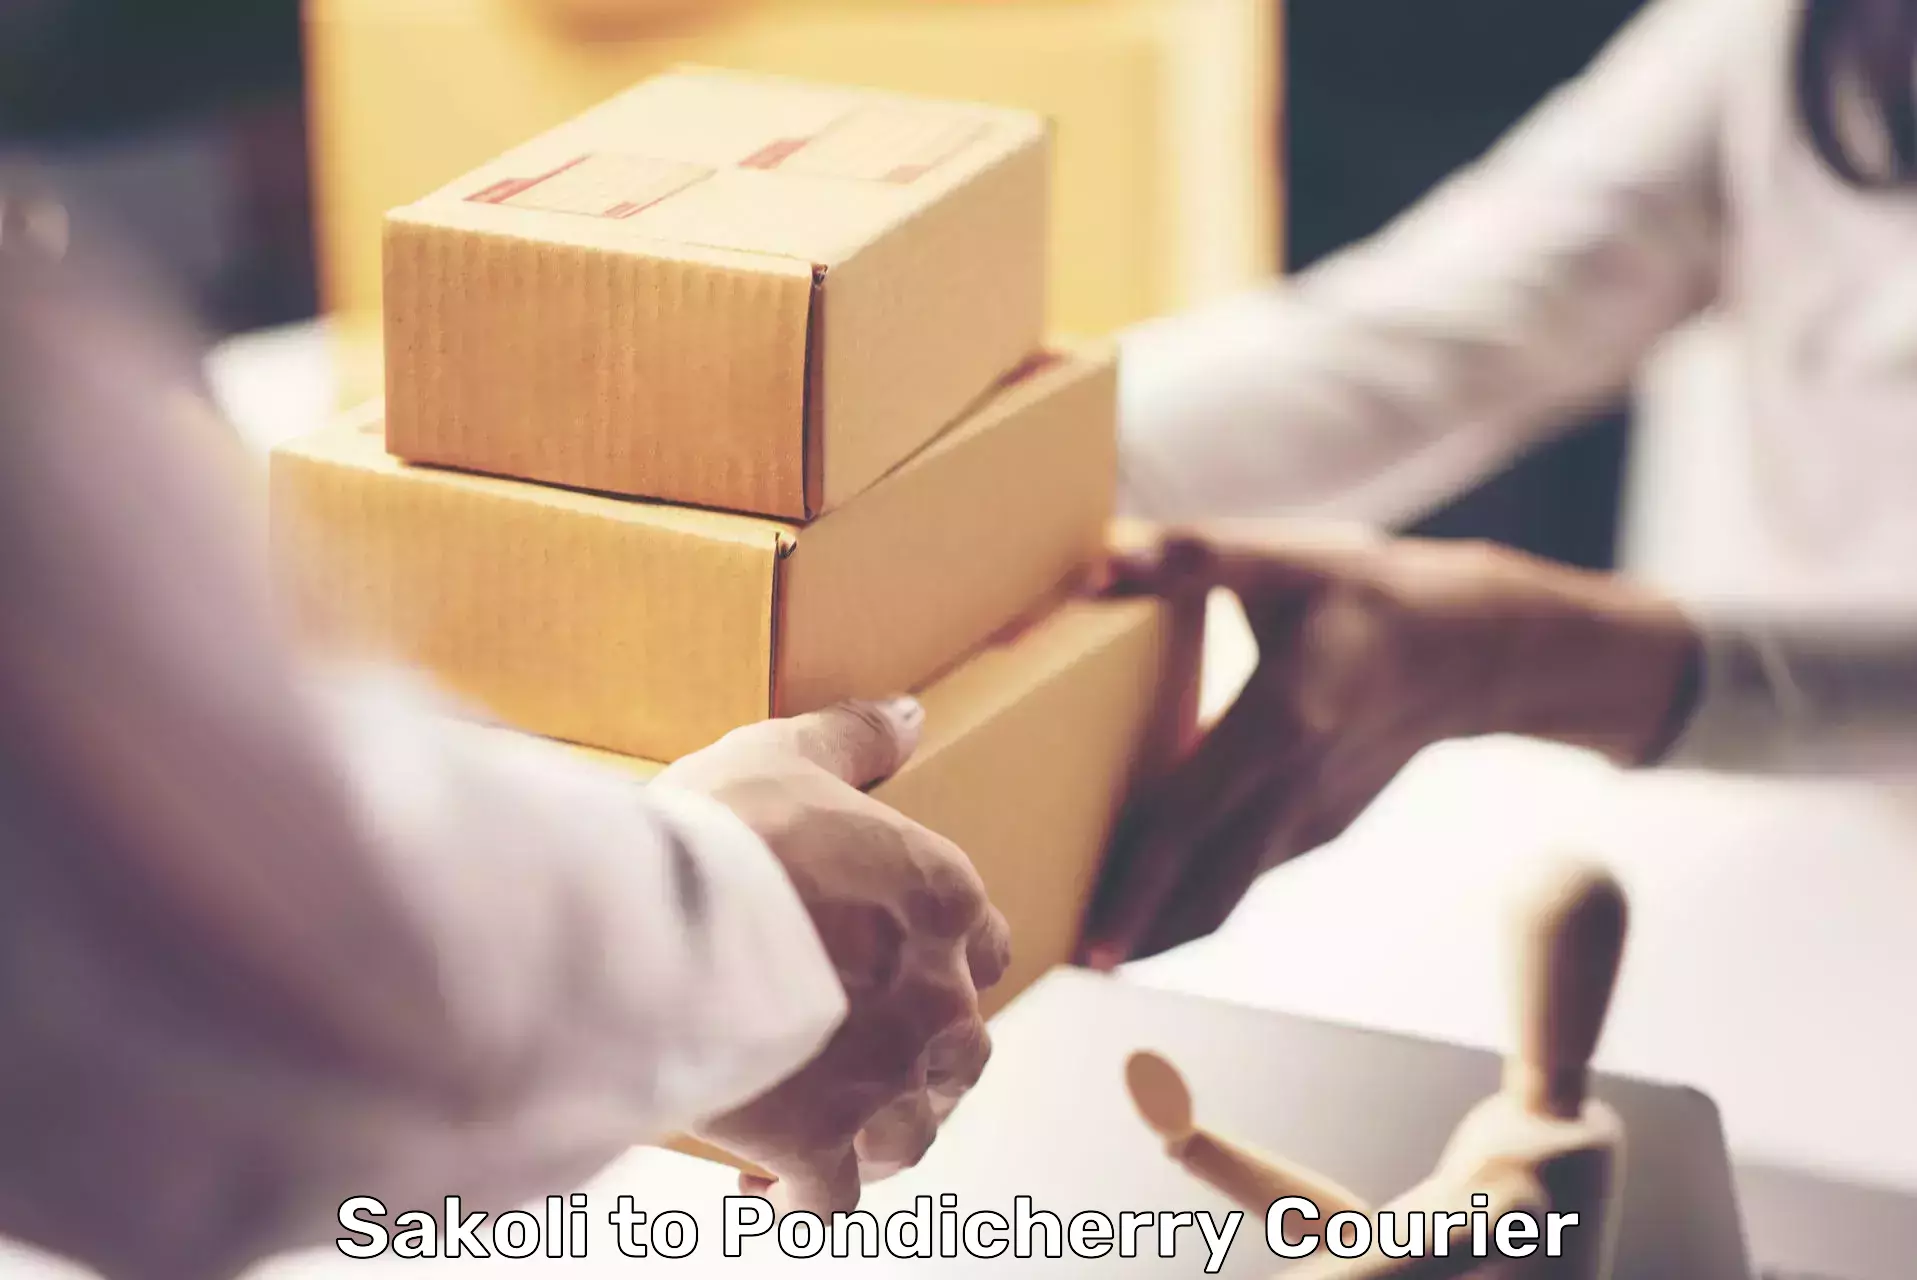 Courier service comparison Sakoli to Pondicherry